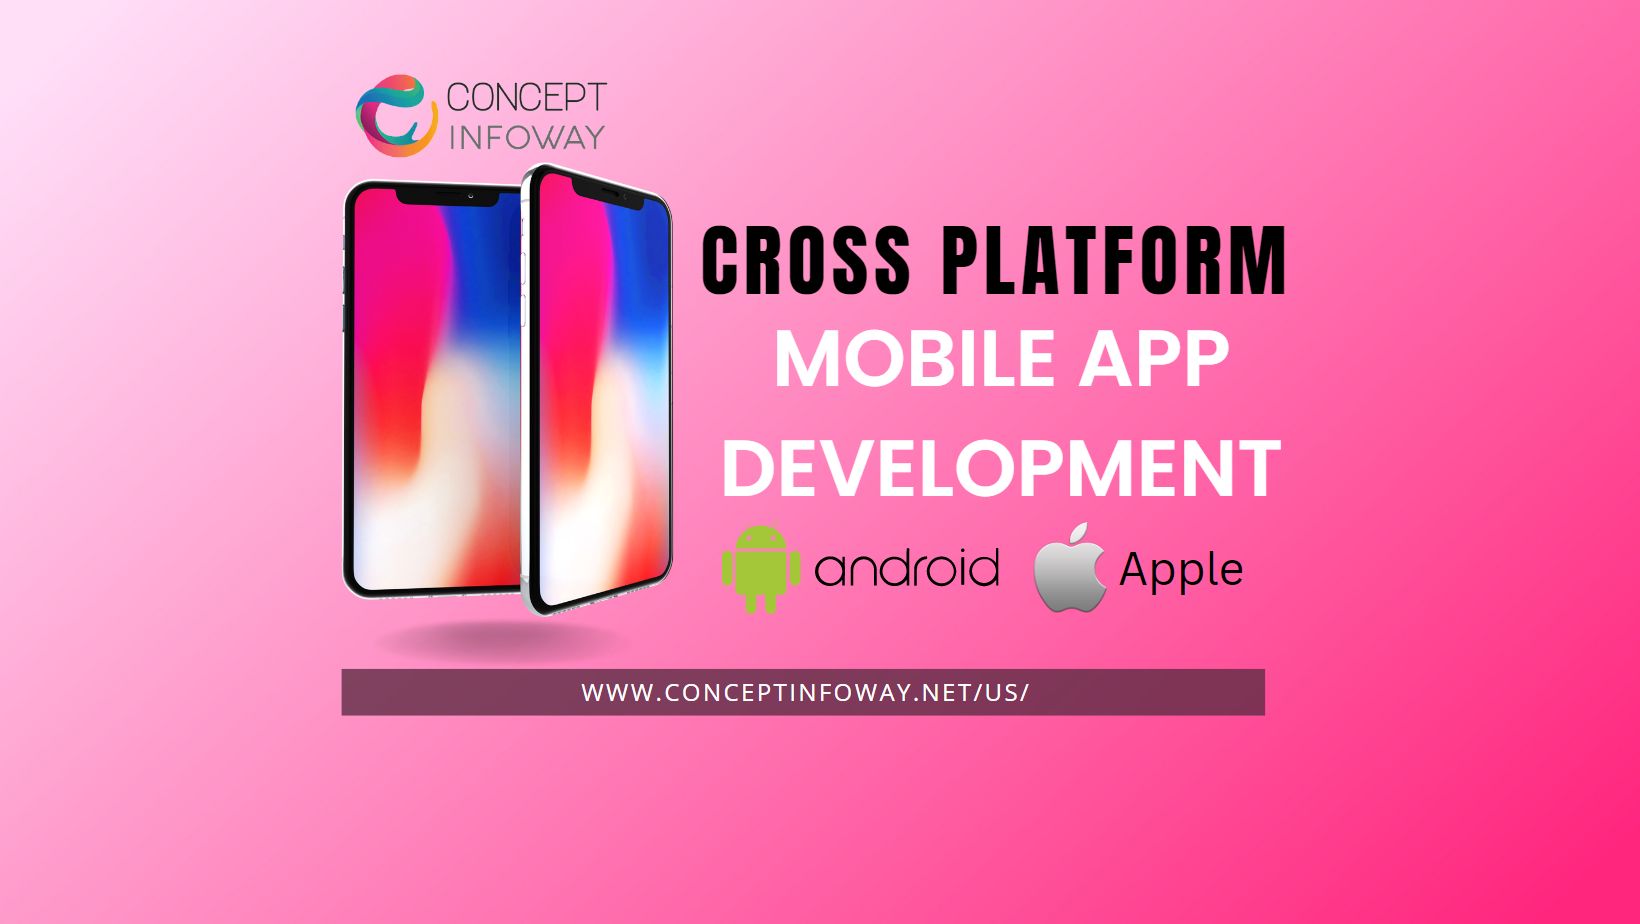 Cross Platform Mobile App Development Company in Greenville SC